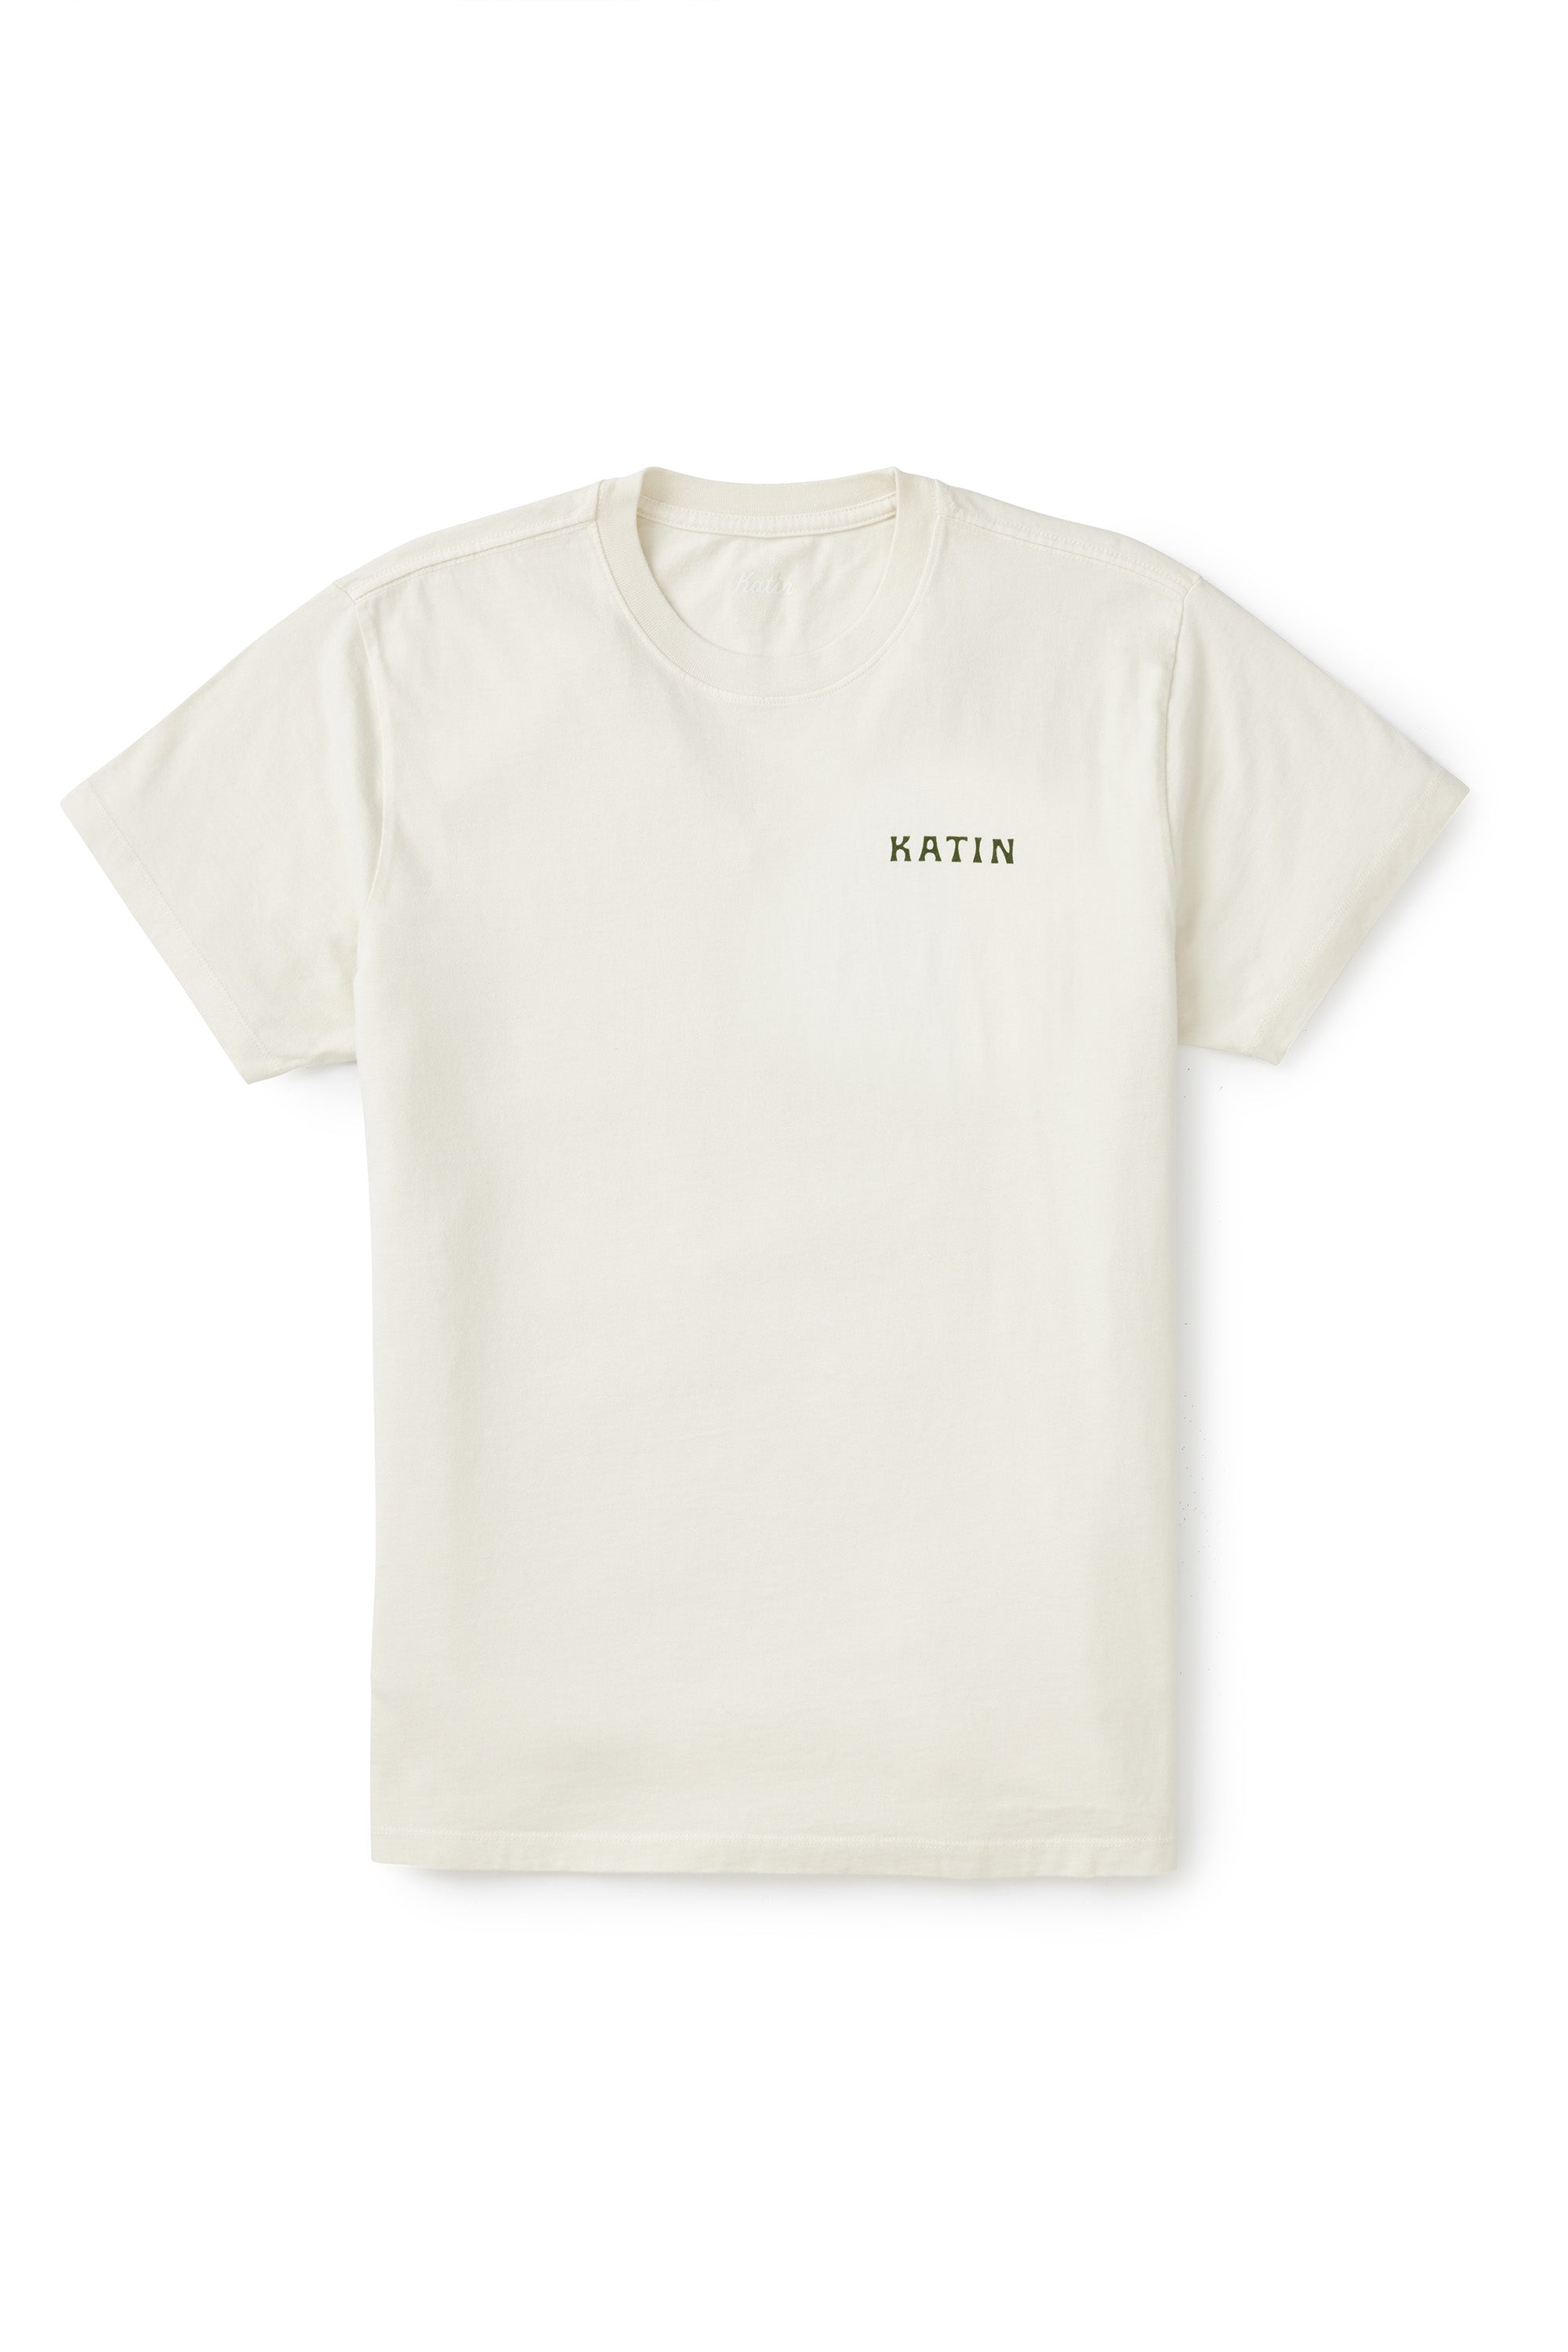 Vista T-shirt | Katin USA